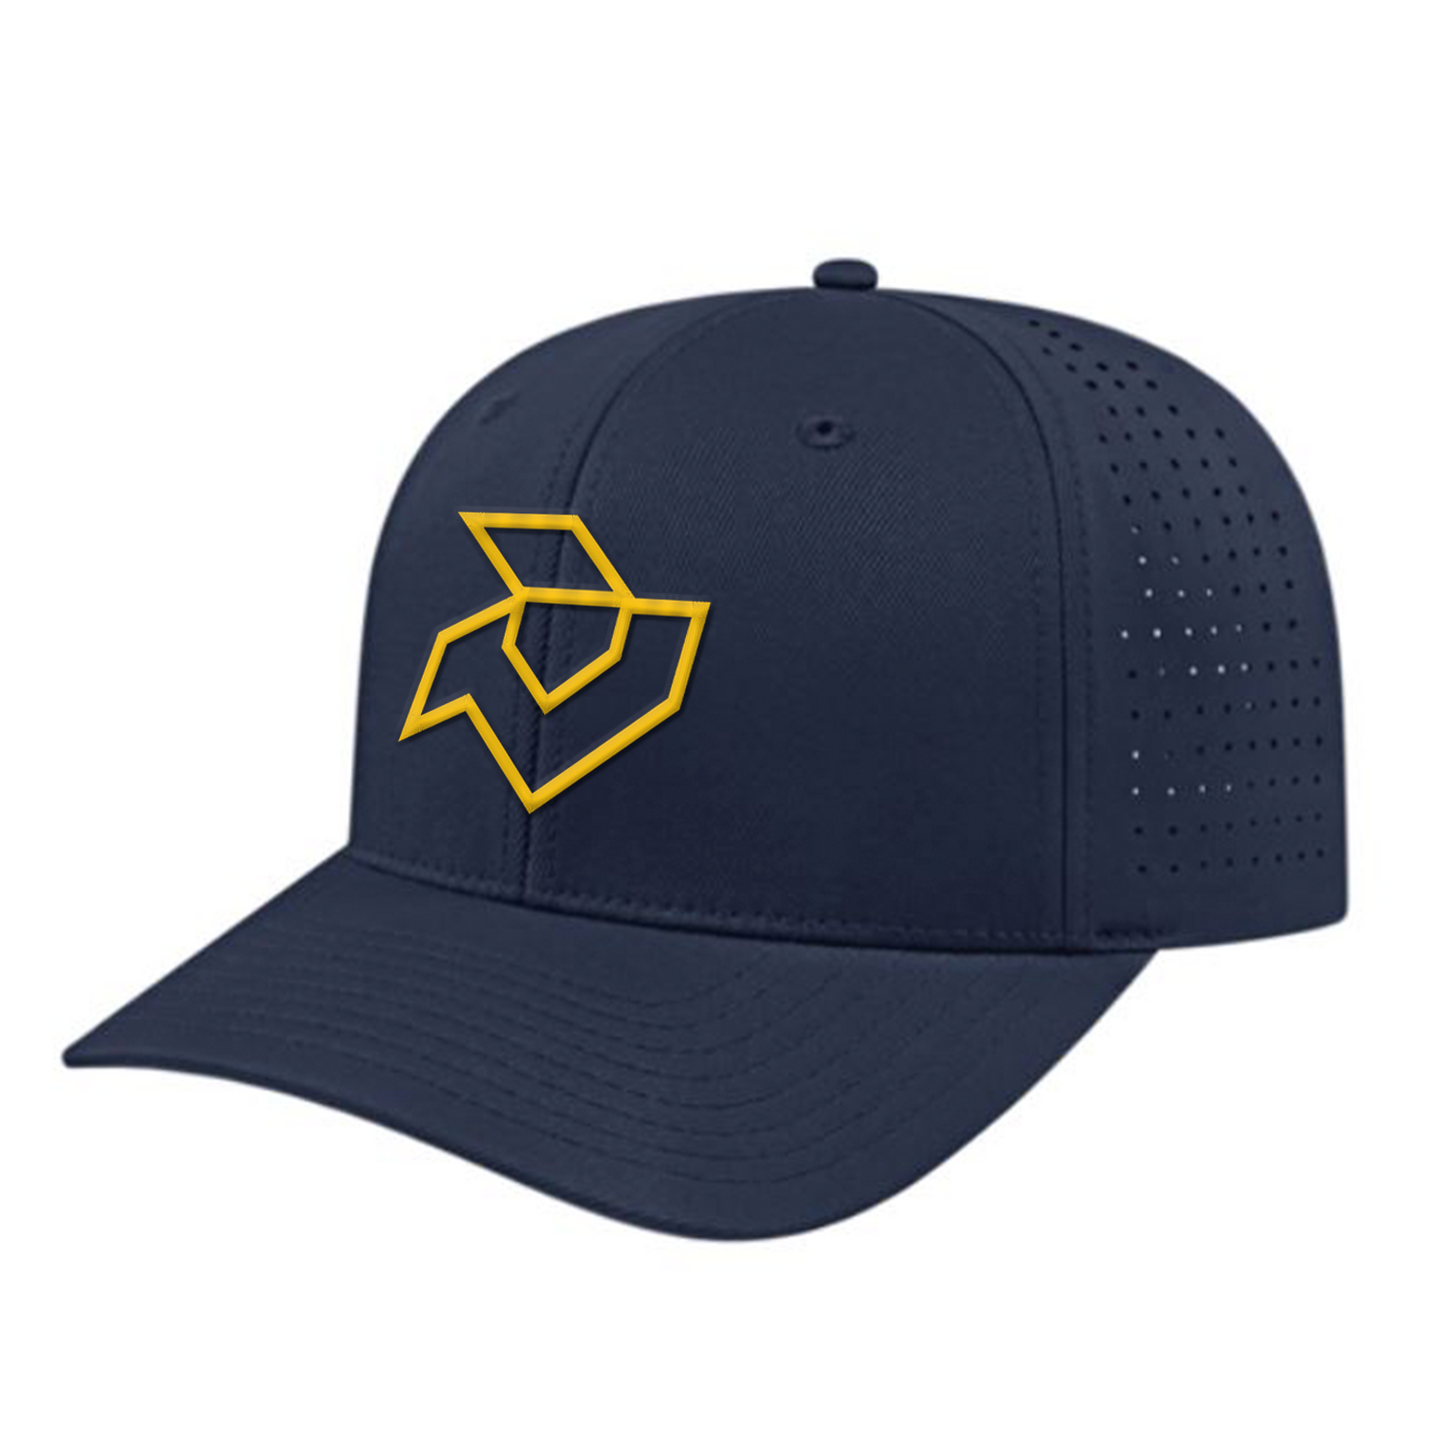 DeMarini Navy Blue Snapback Trucker Cap - Gold Logo